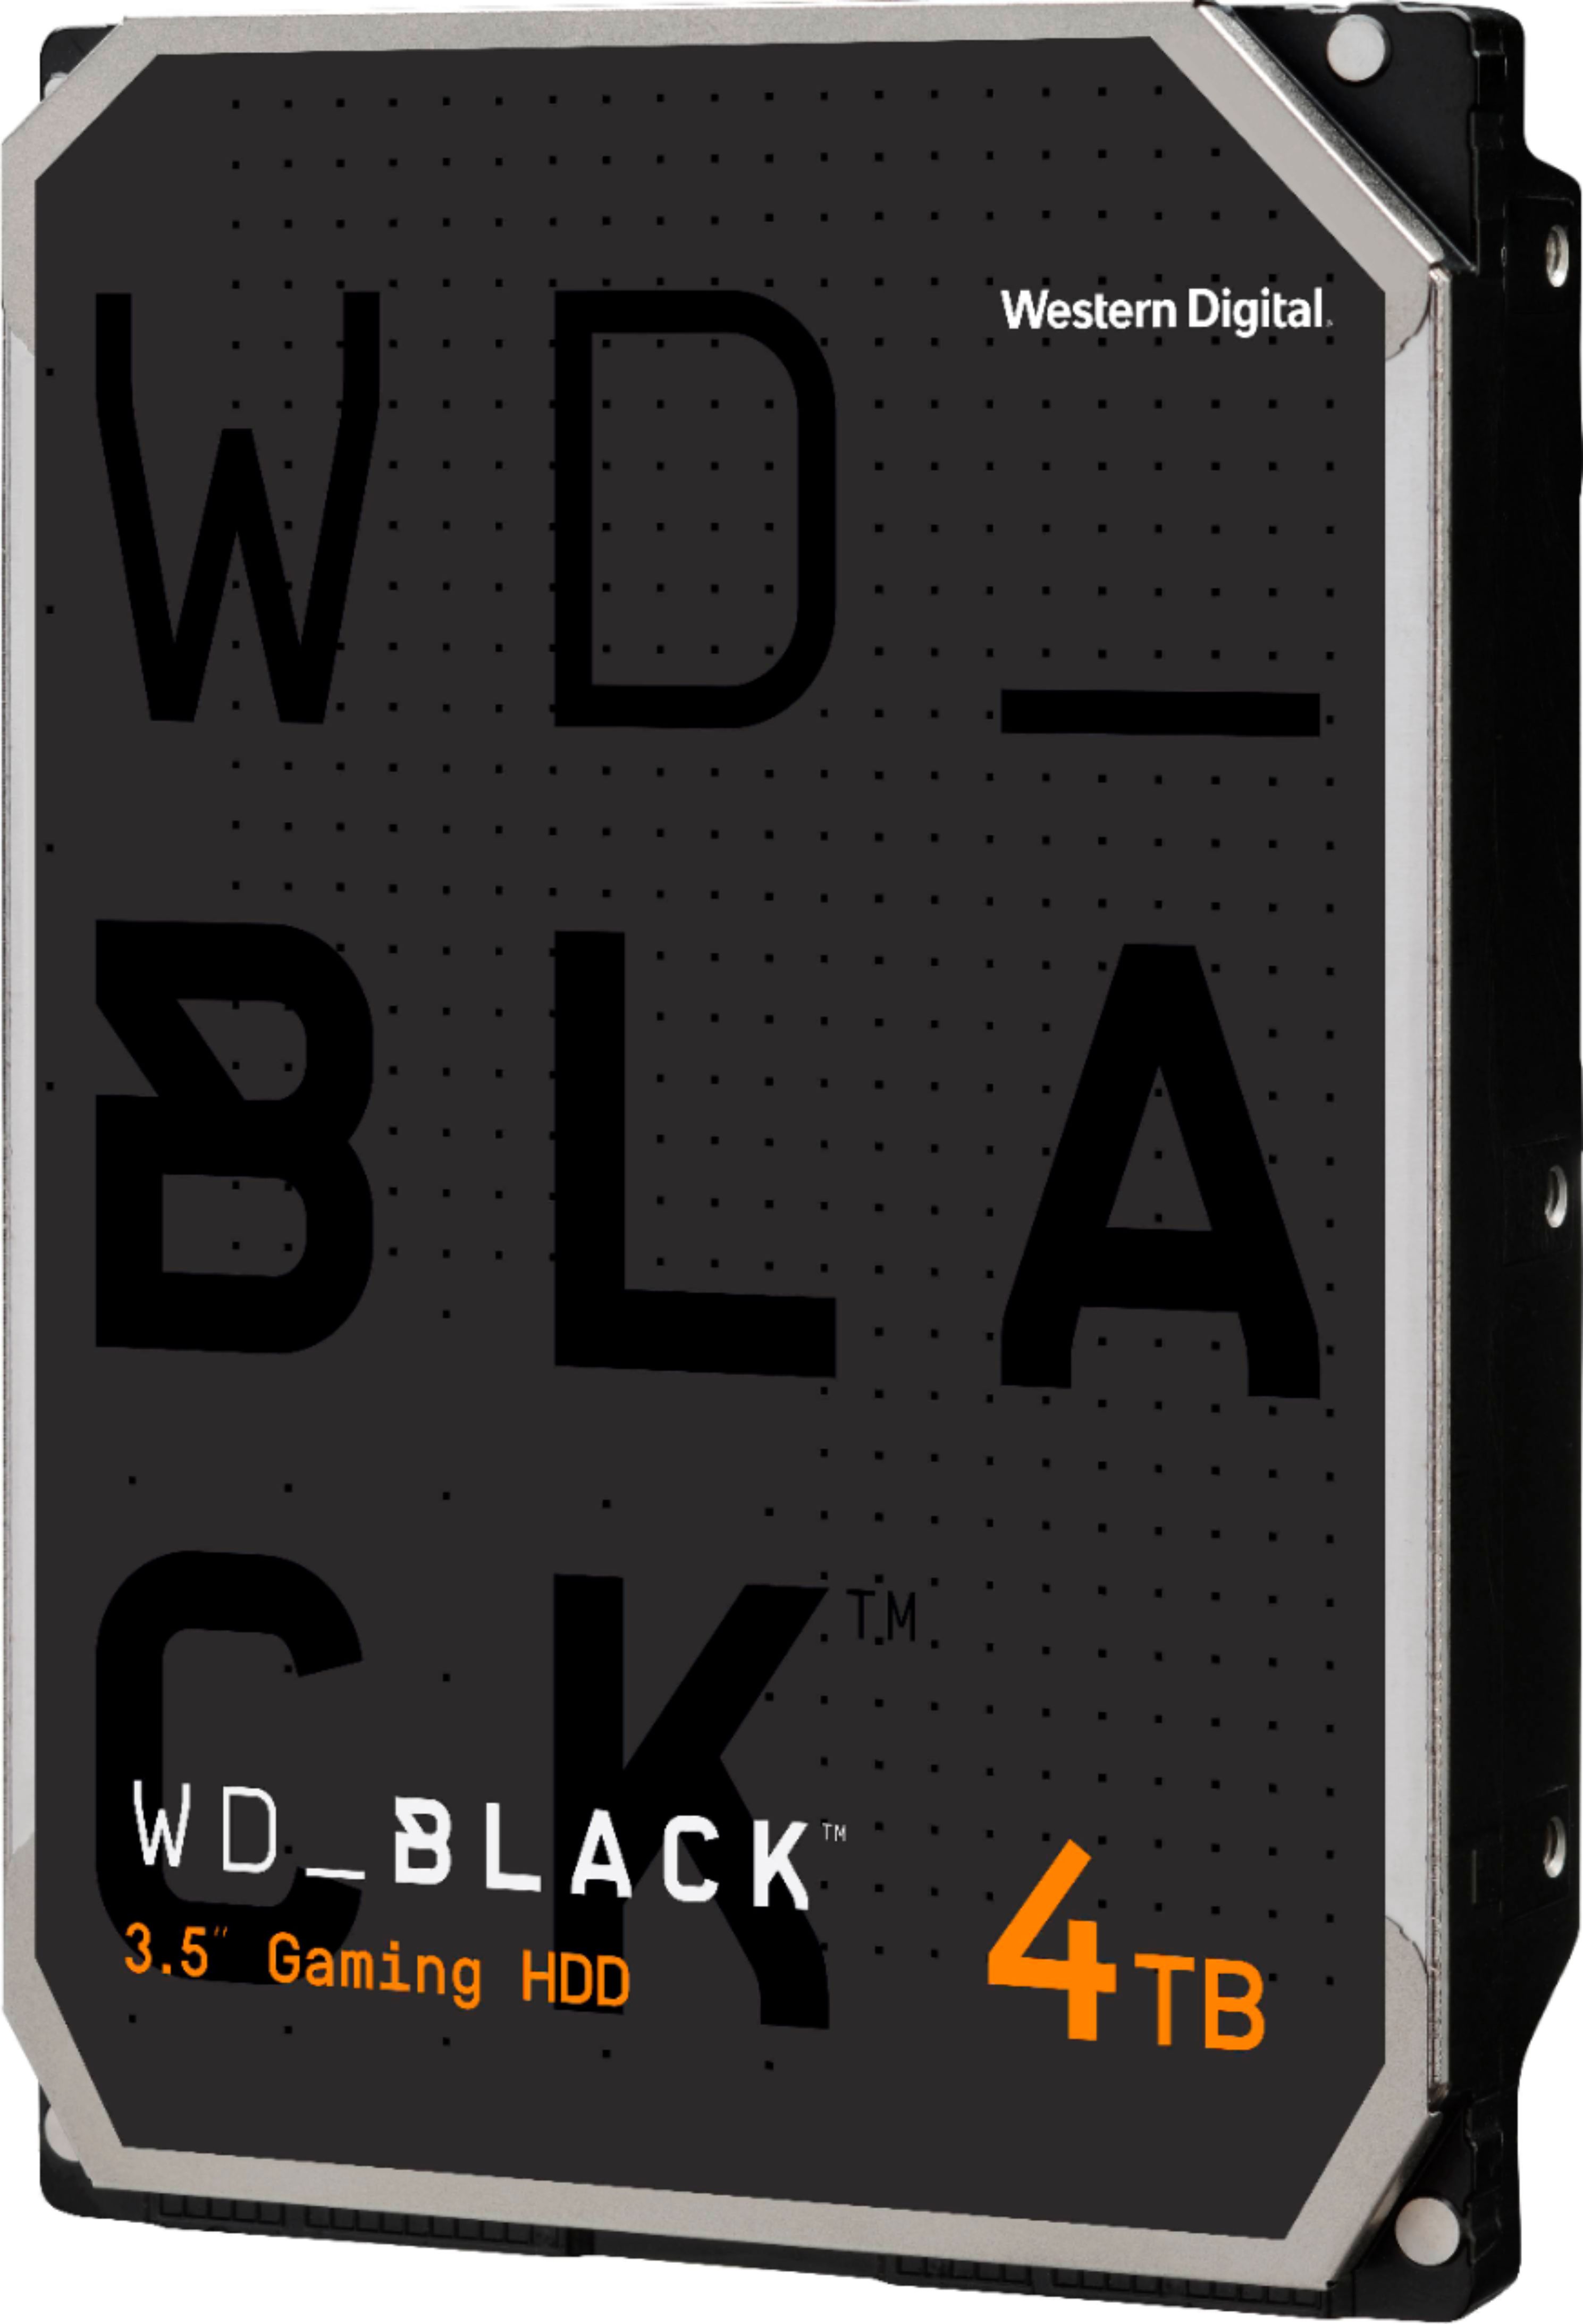 WD BLACK Gaming 4TB Internal SATA Hard Drive WDBSLA0040HNC-NRSN - Best Buy